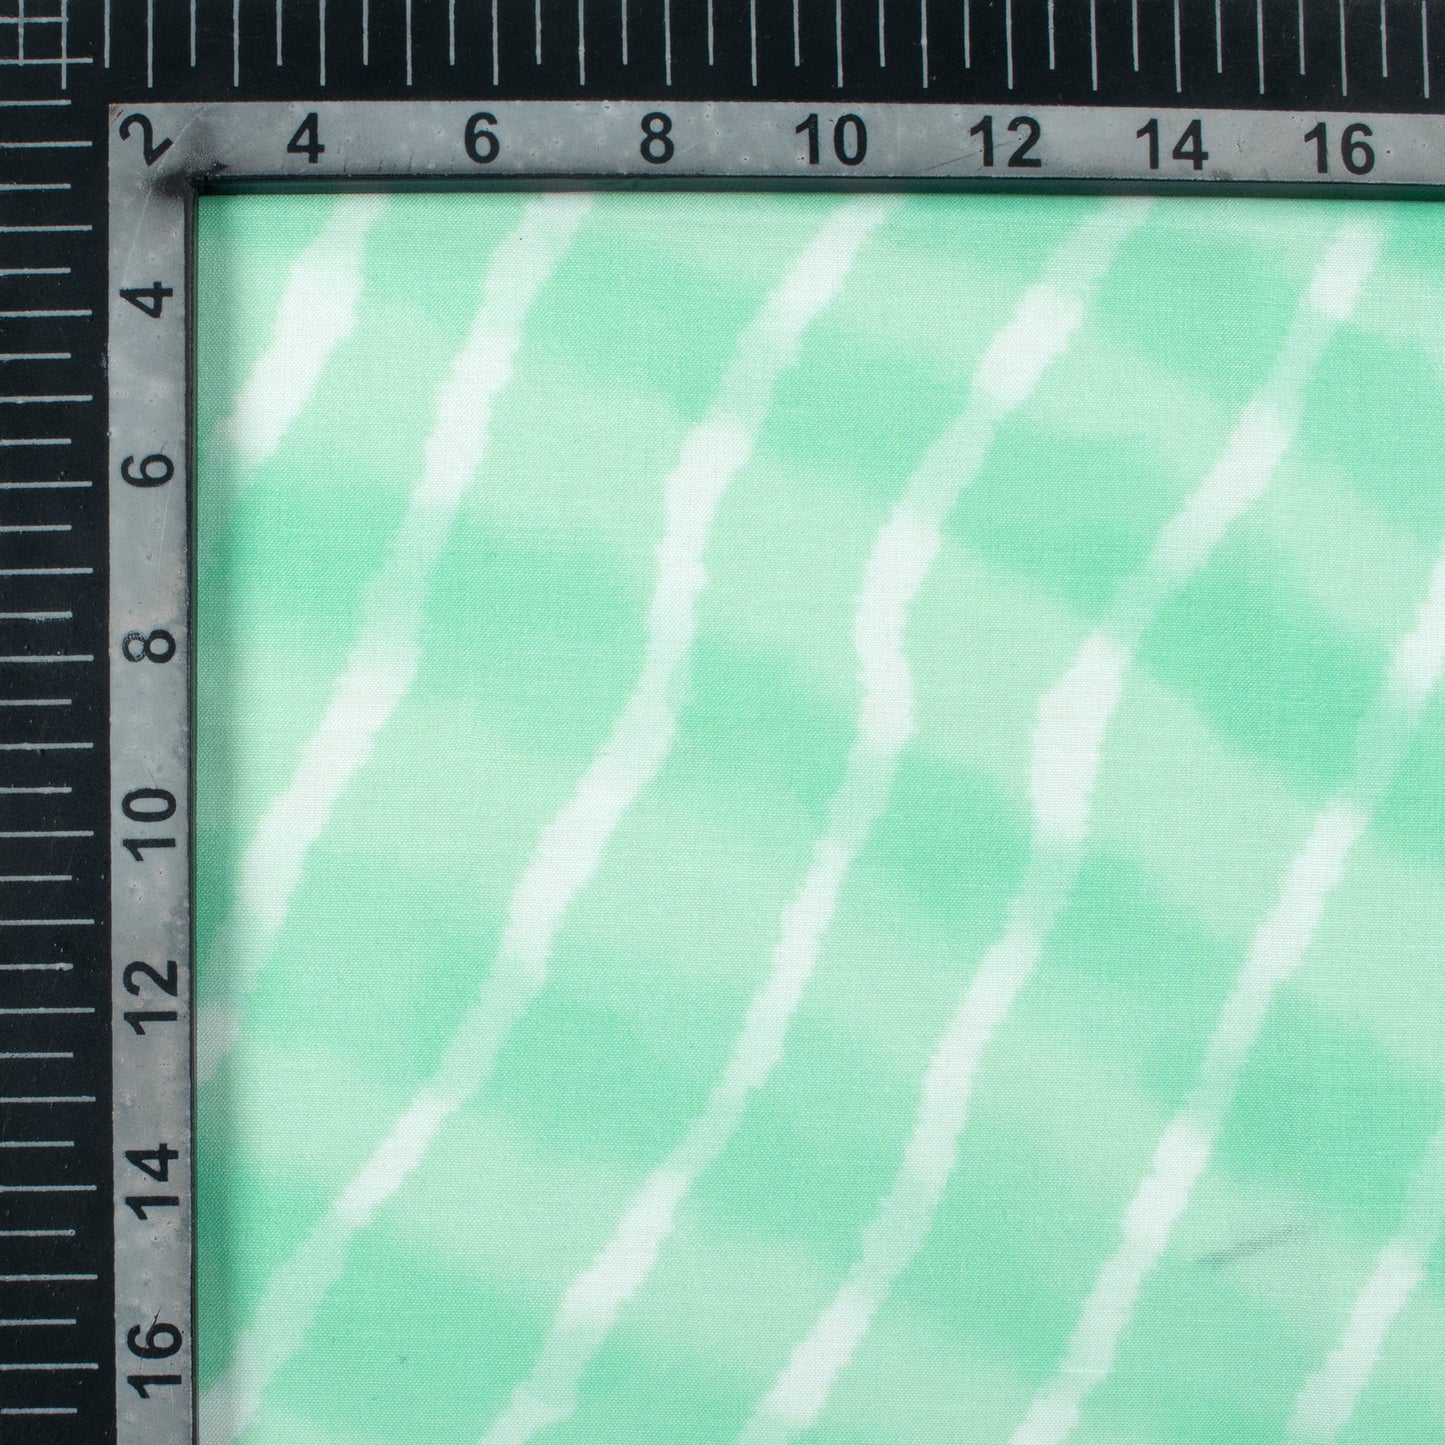 Mint Green And White Leheriya Pattern Digital Print Muslin Fabric